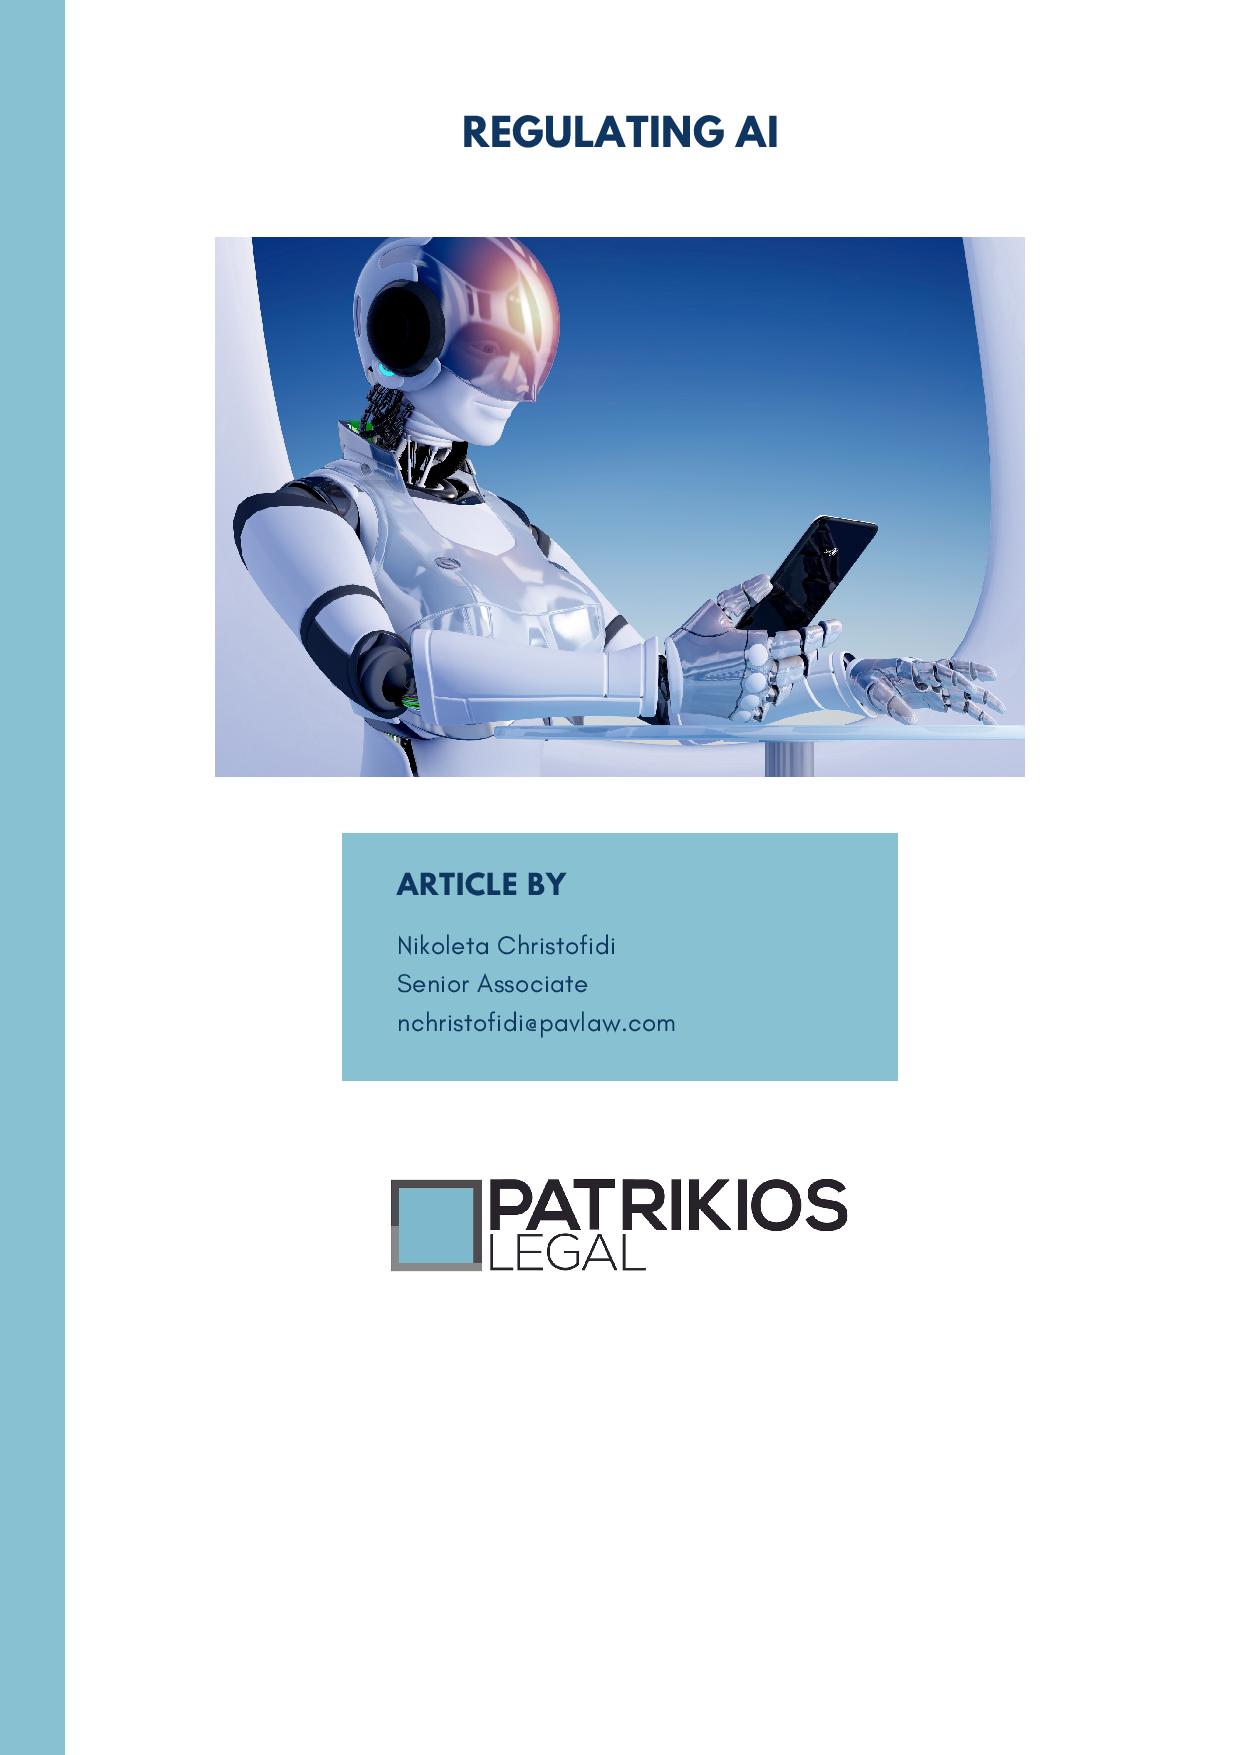 Patrikios Legal: Shedding Light On The Recent Regulation of AI!